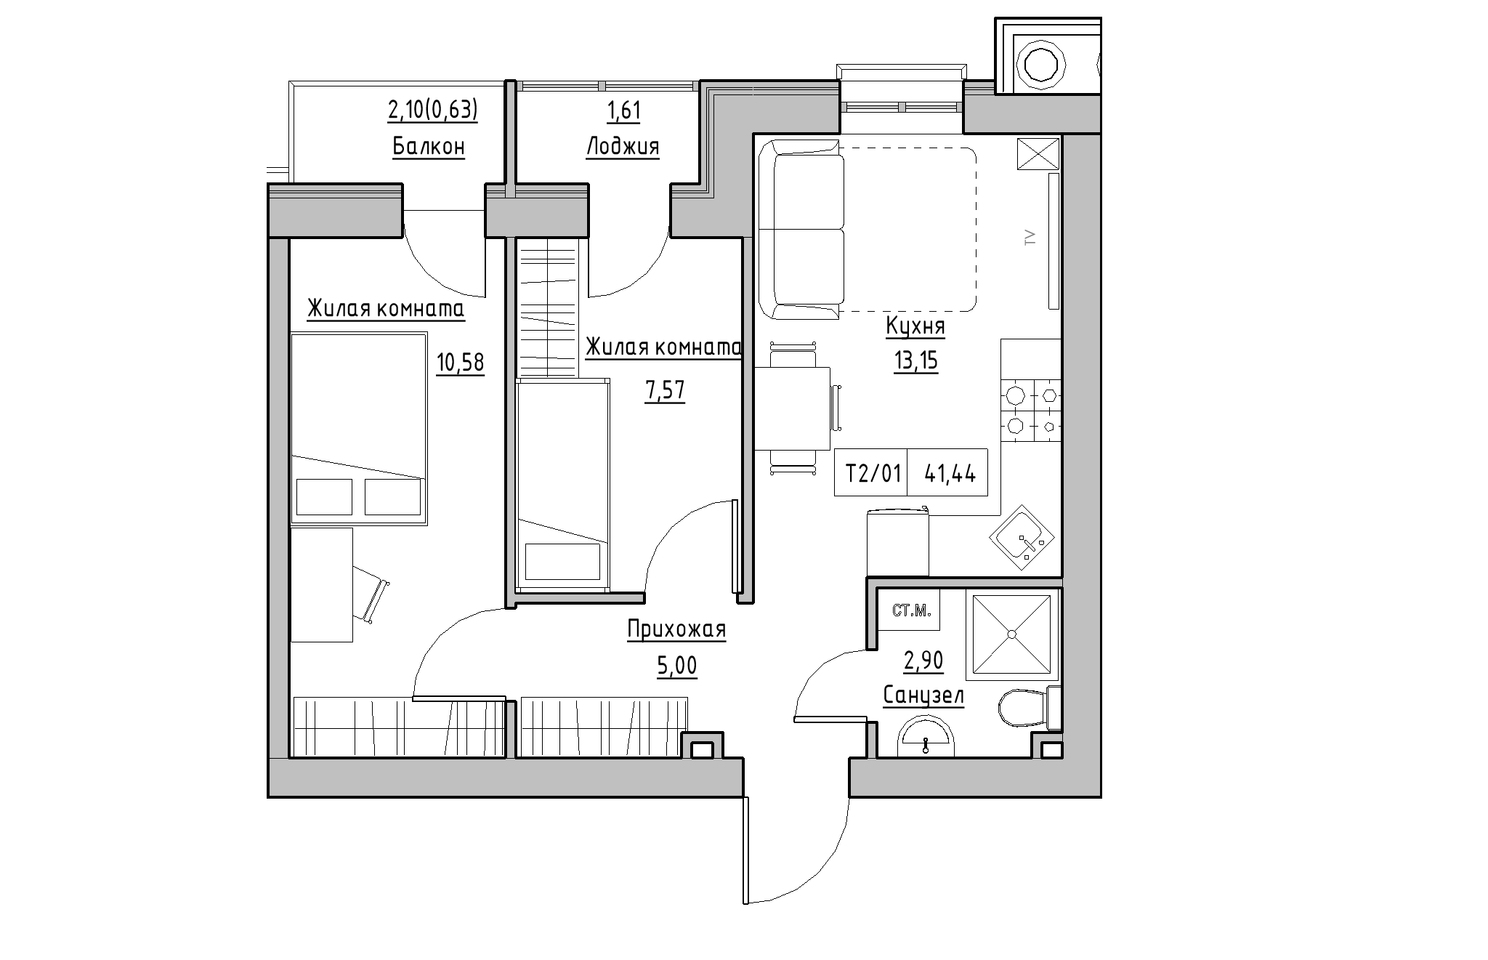 Planning 2-rm flats area 41.44m2, KS-010-04/0005.